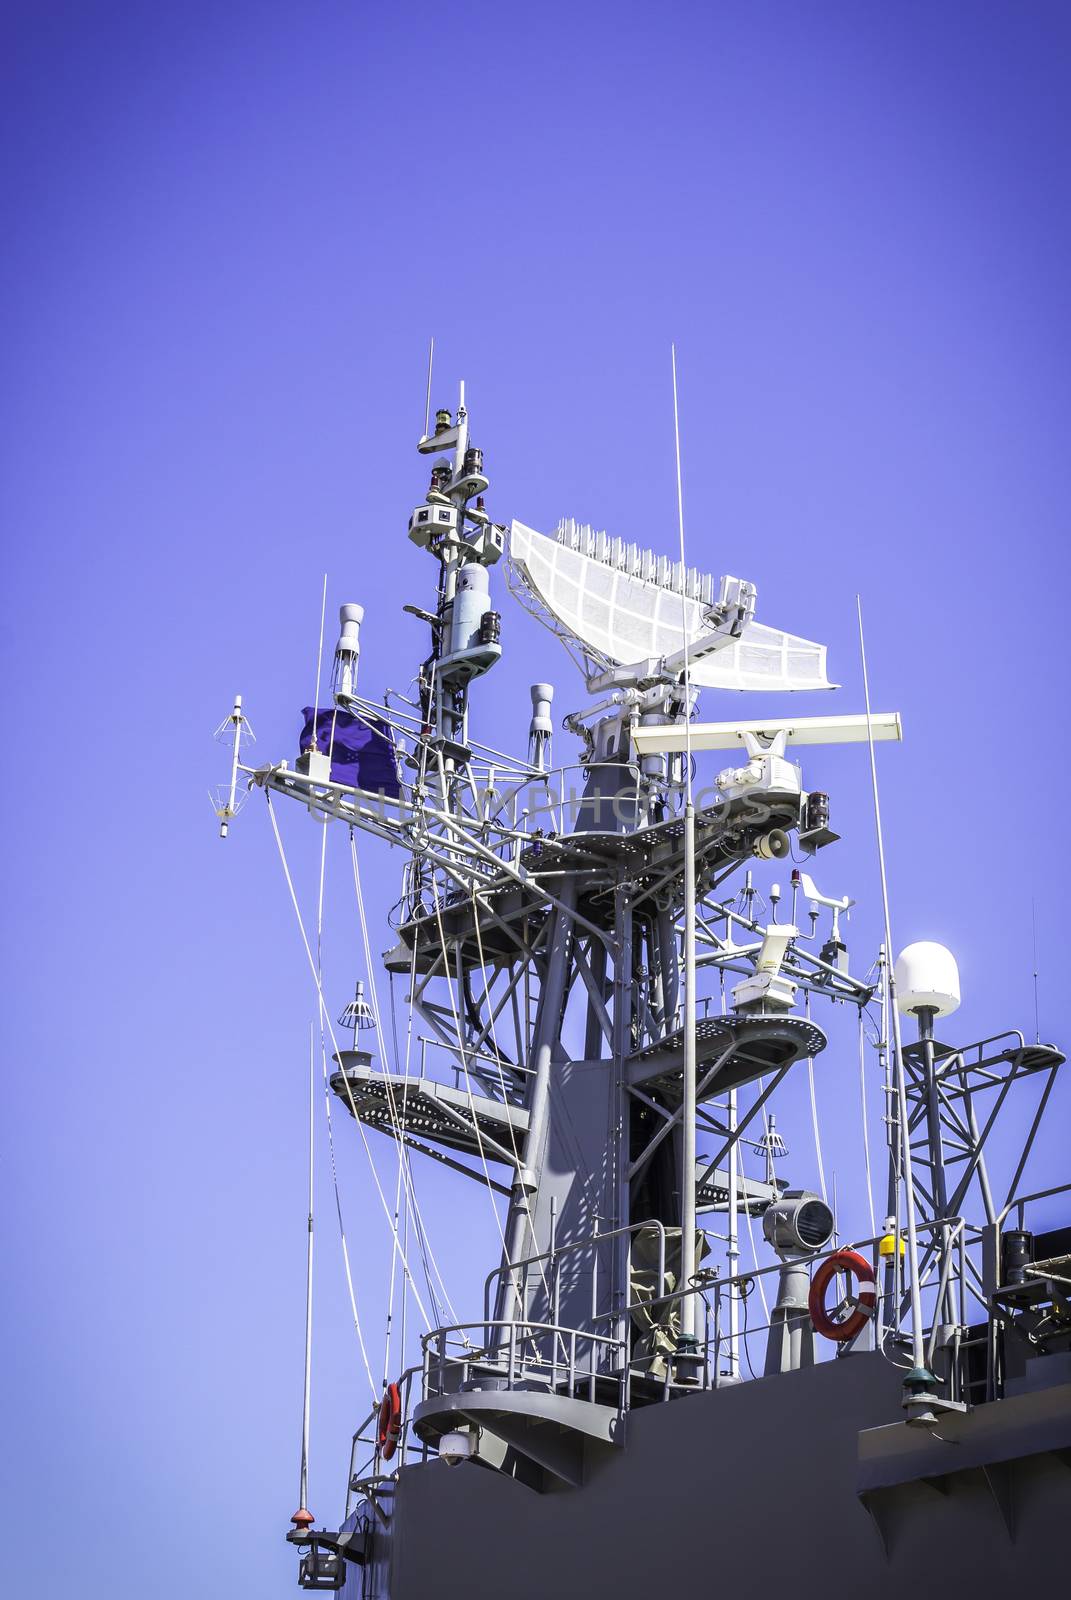 Radar on battleship with blue sky background